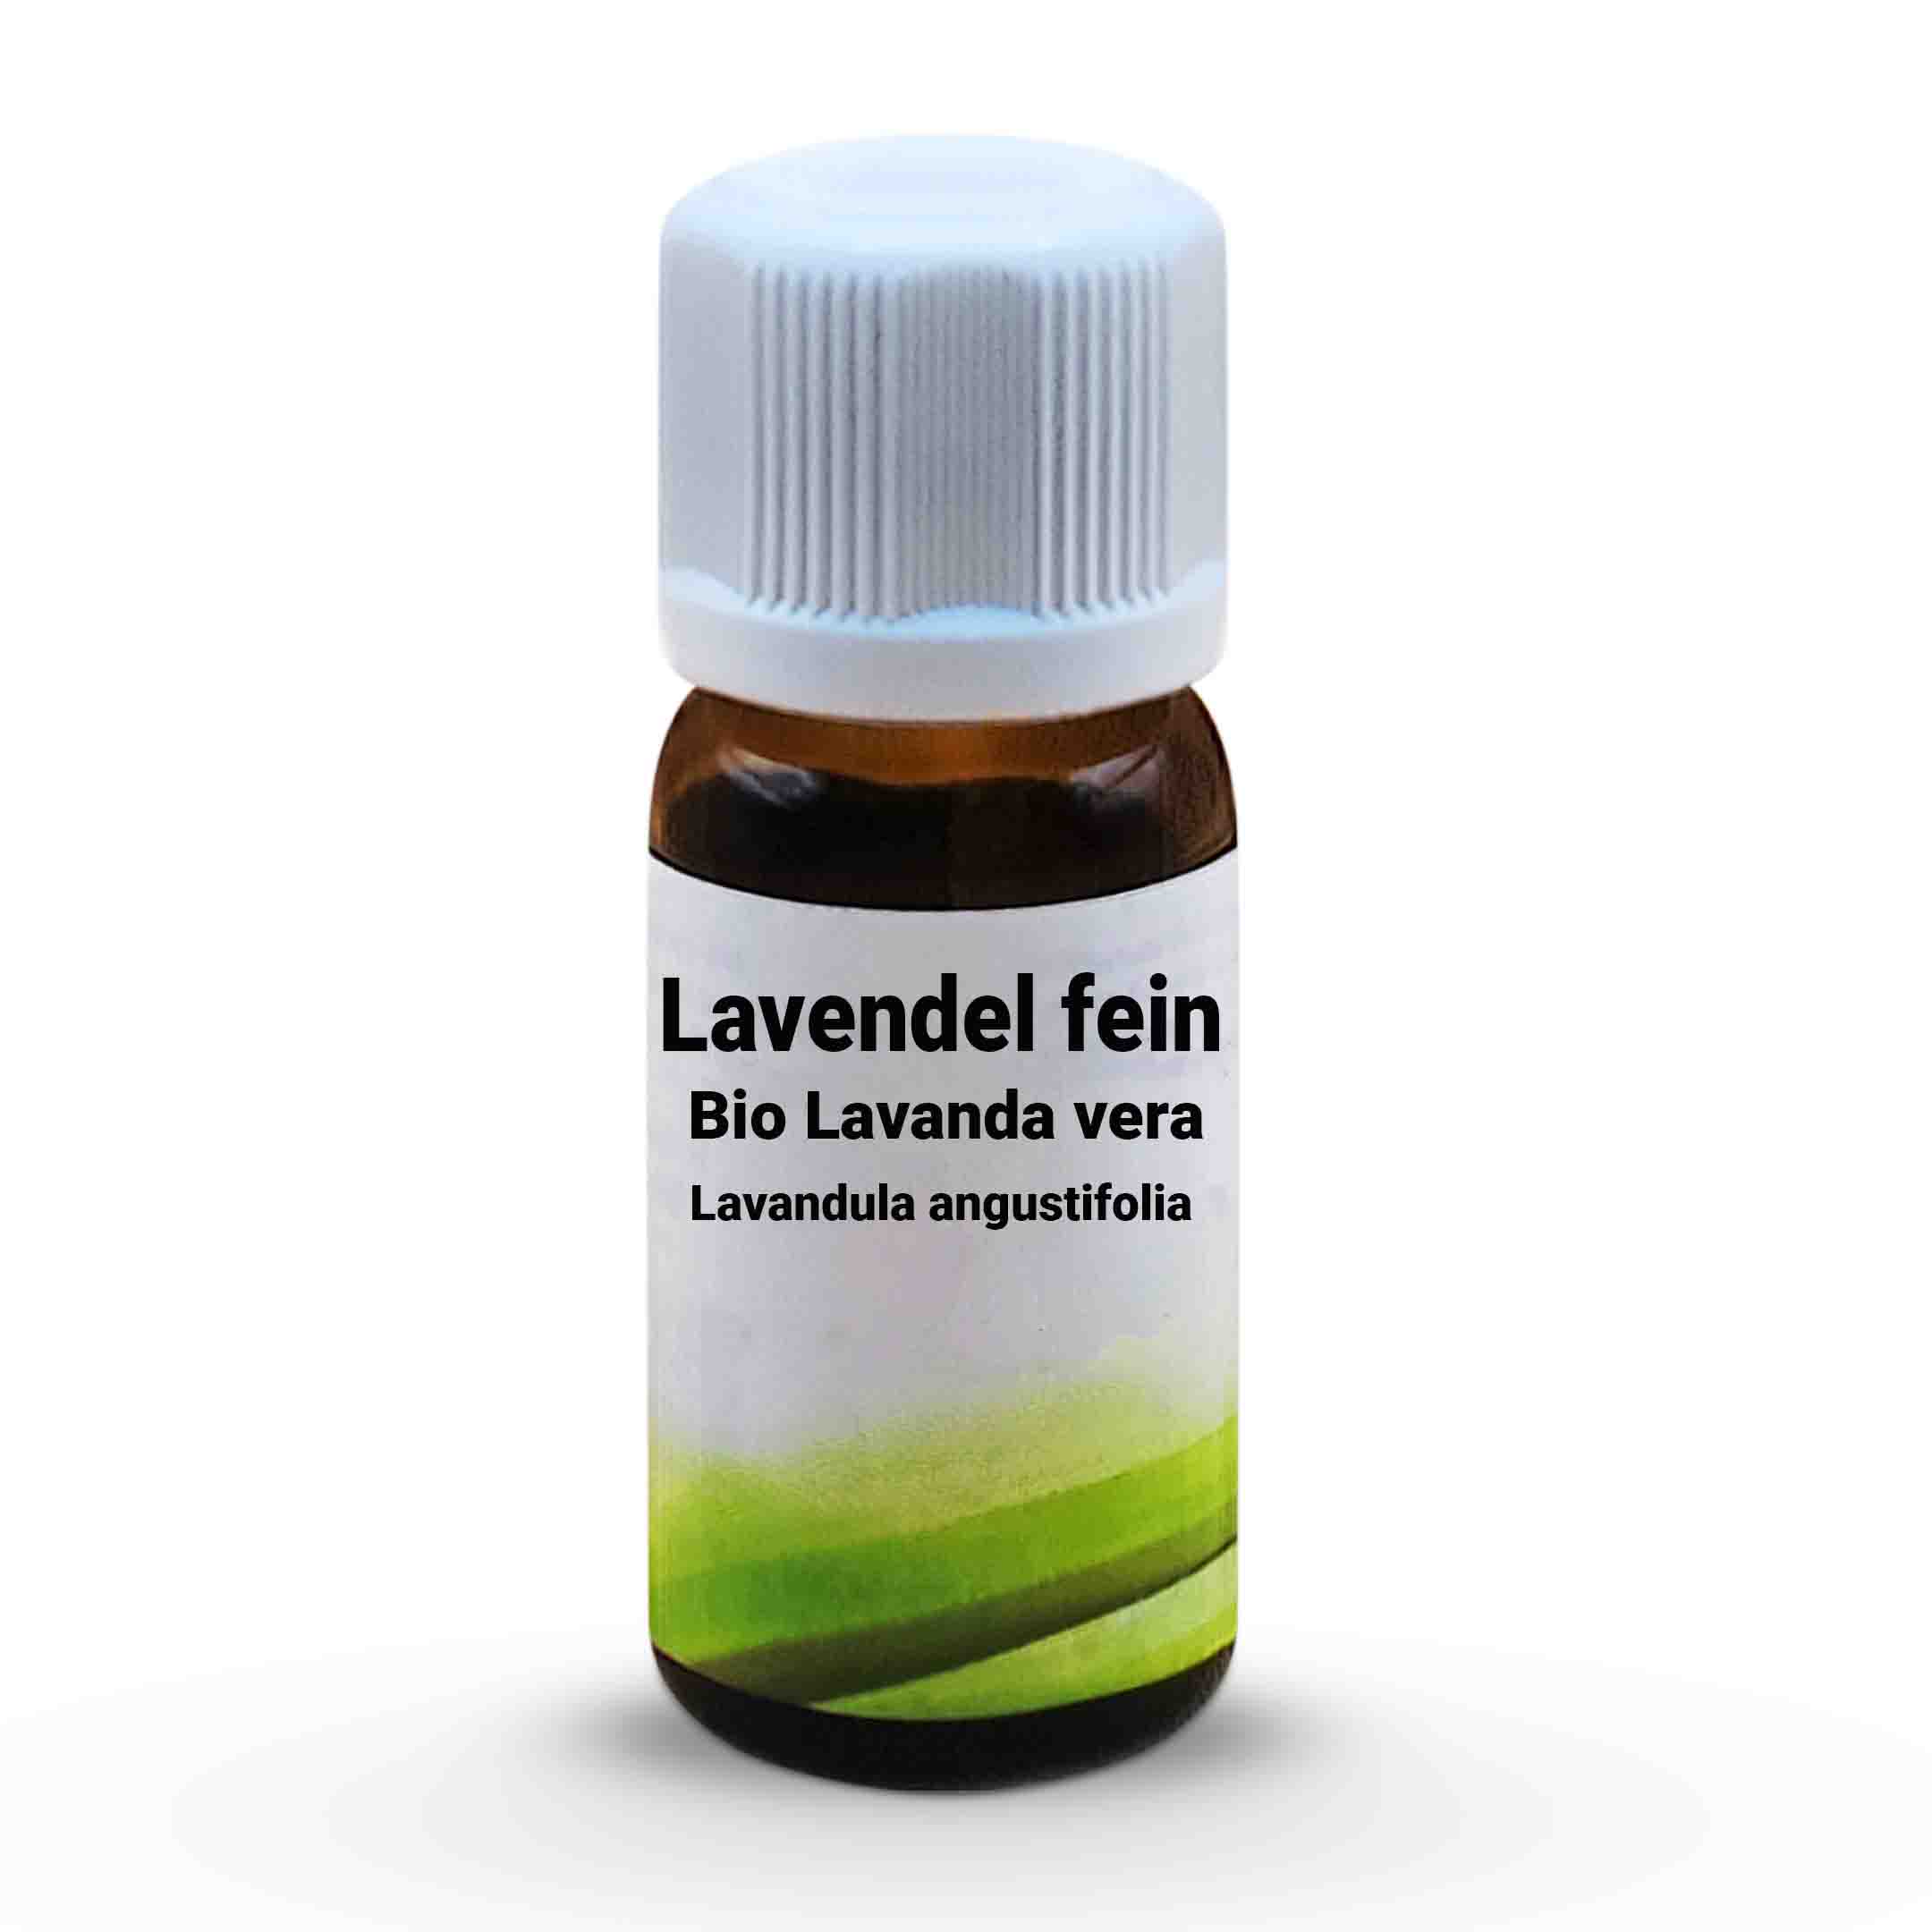 Lavendel fein Bio Lavanda vera Lavandula angustifolia 10ml